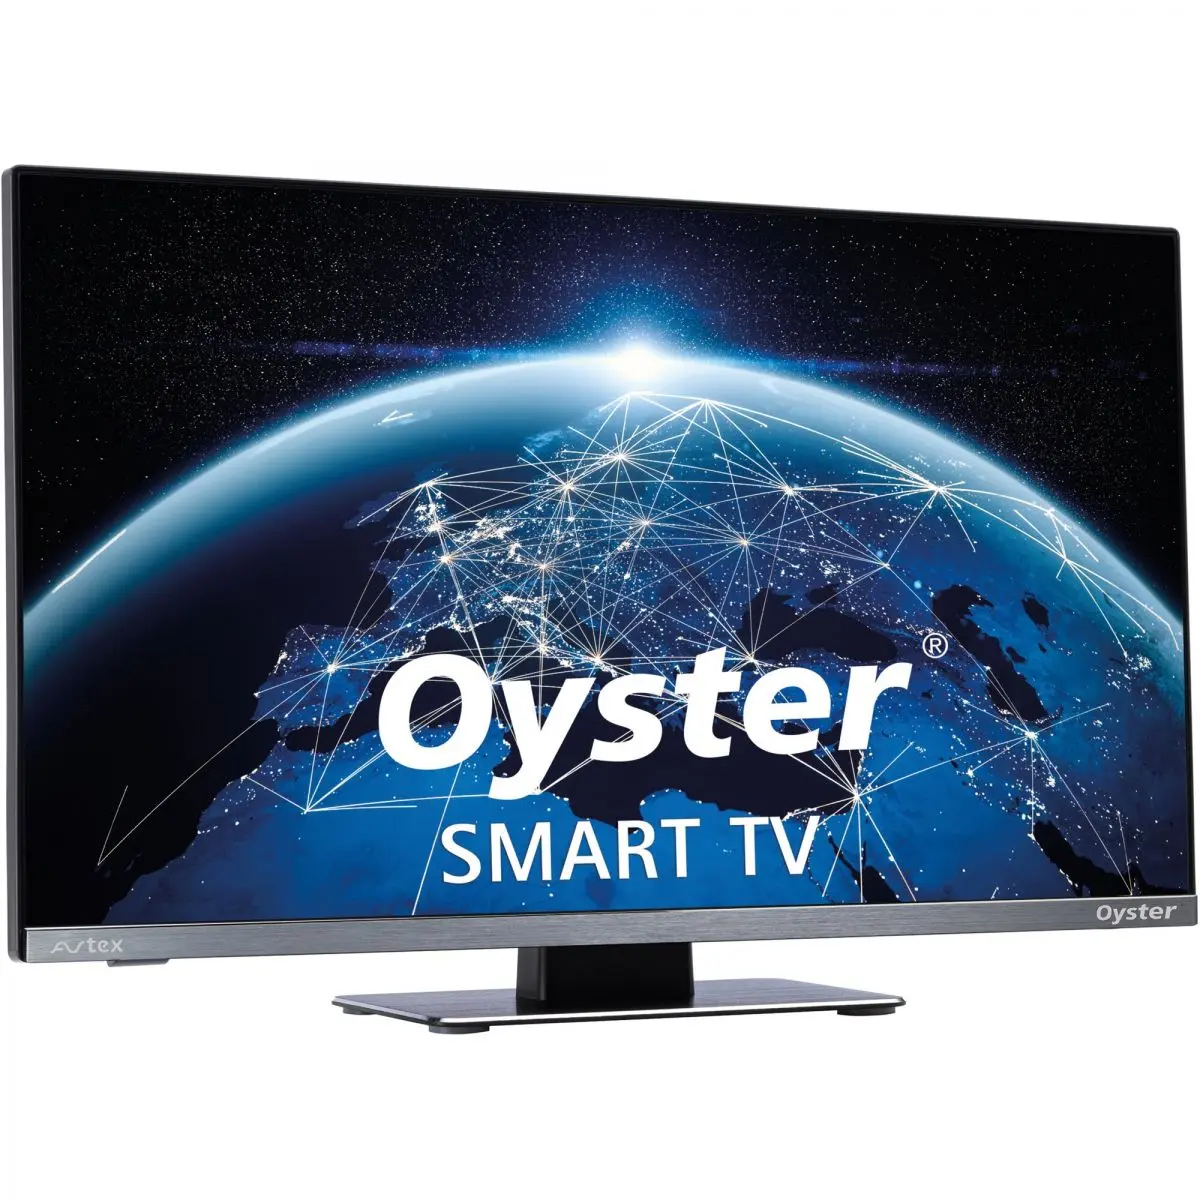 Smart TV Oyster 19,5, 12 volți